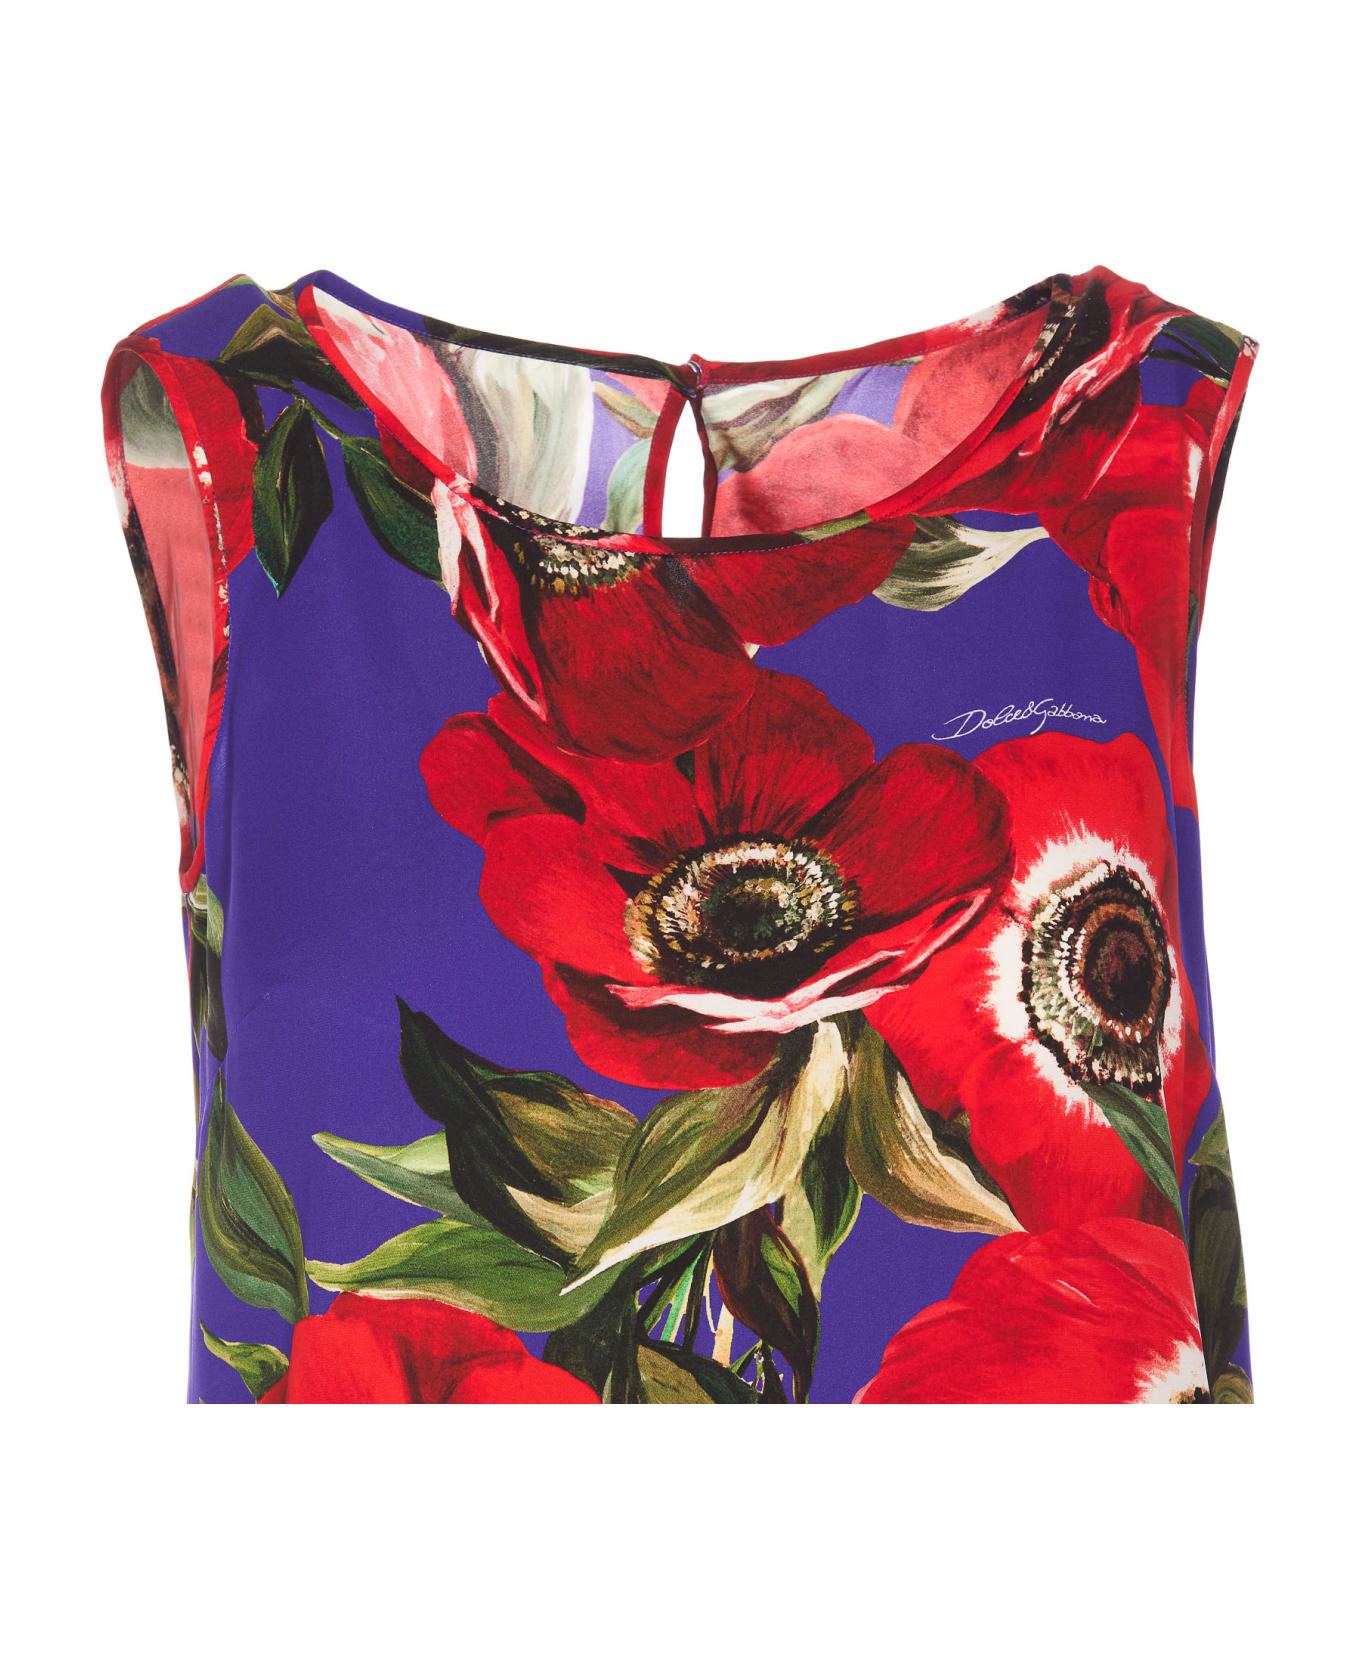 Dolce & Gabbana Printed Silk Top - red